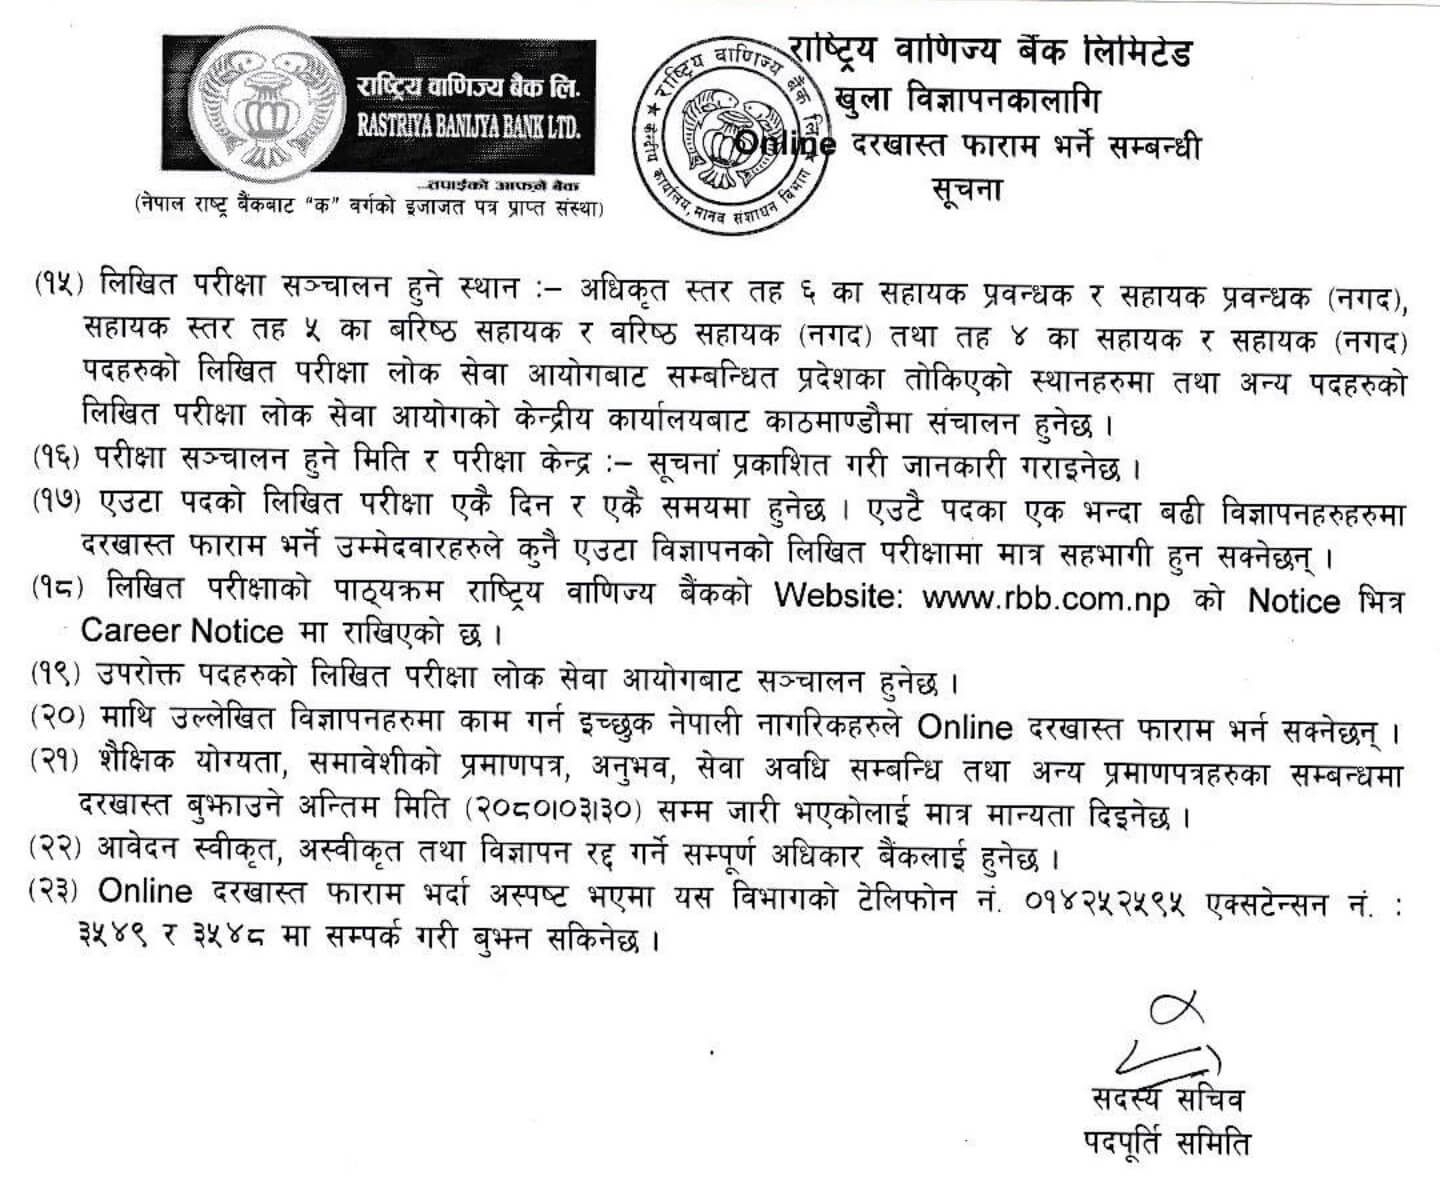 Rastriya Banijya Bank - RBB Vacancy Notice. Rastriya Banijya Bank Limited Vacancy Announcement